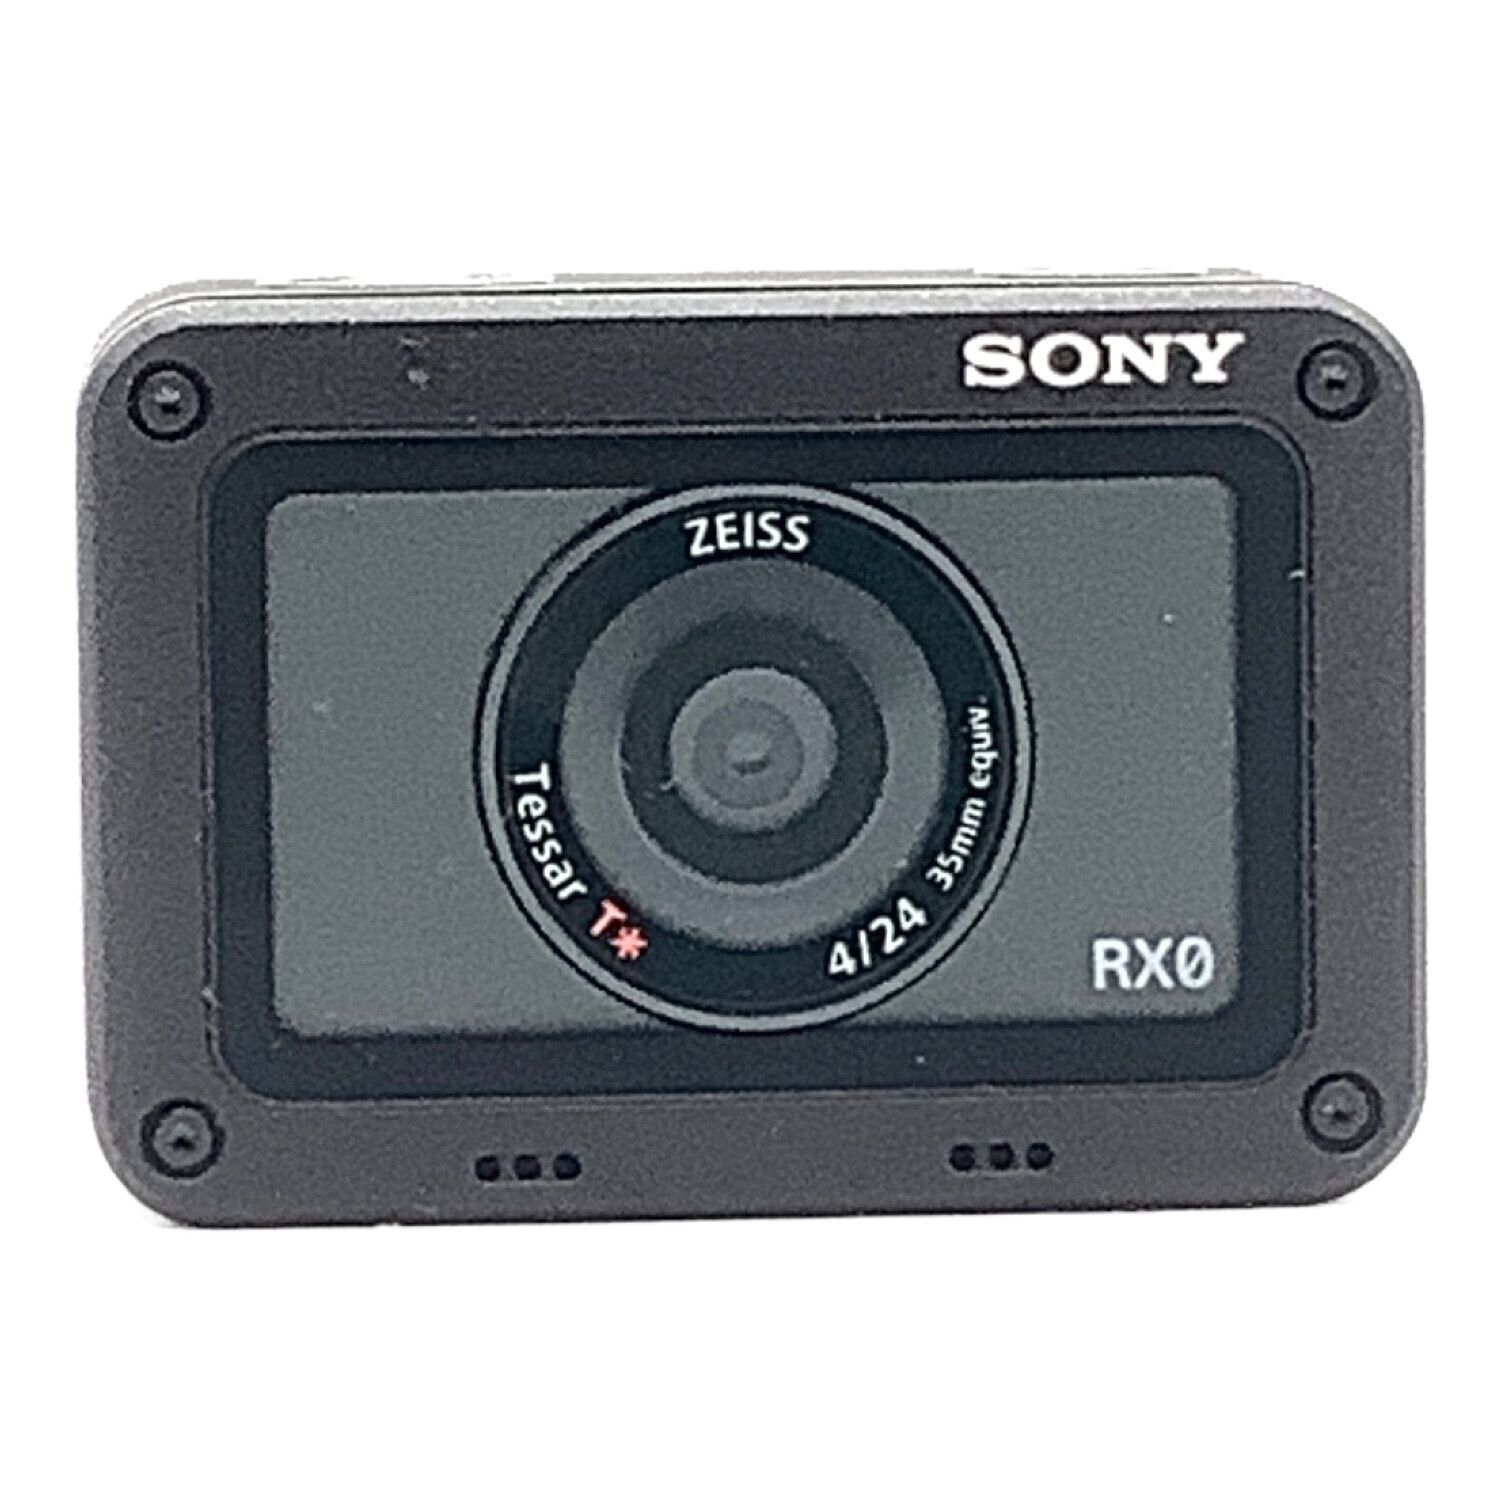 SONY (ソニー) デジタルスチルカメラ DSC-RX0 1530万画素(有効画素) 1